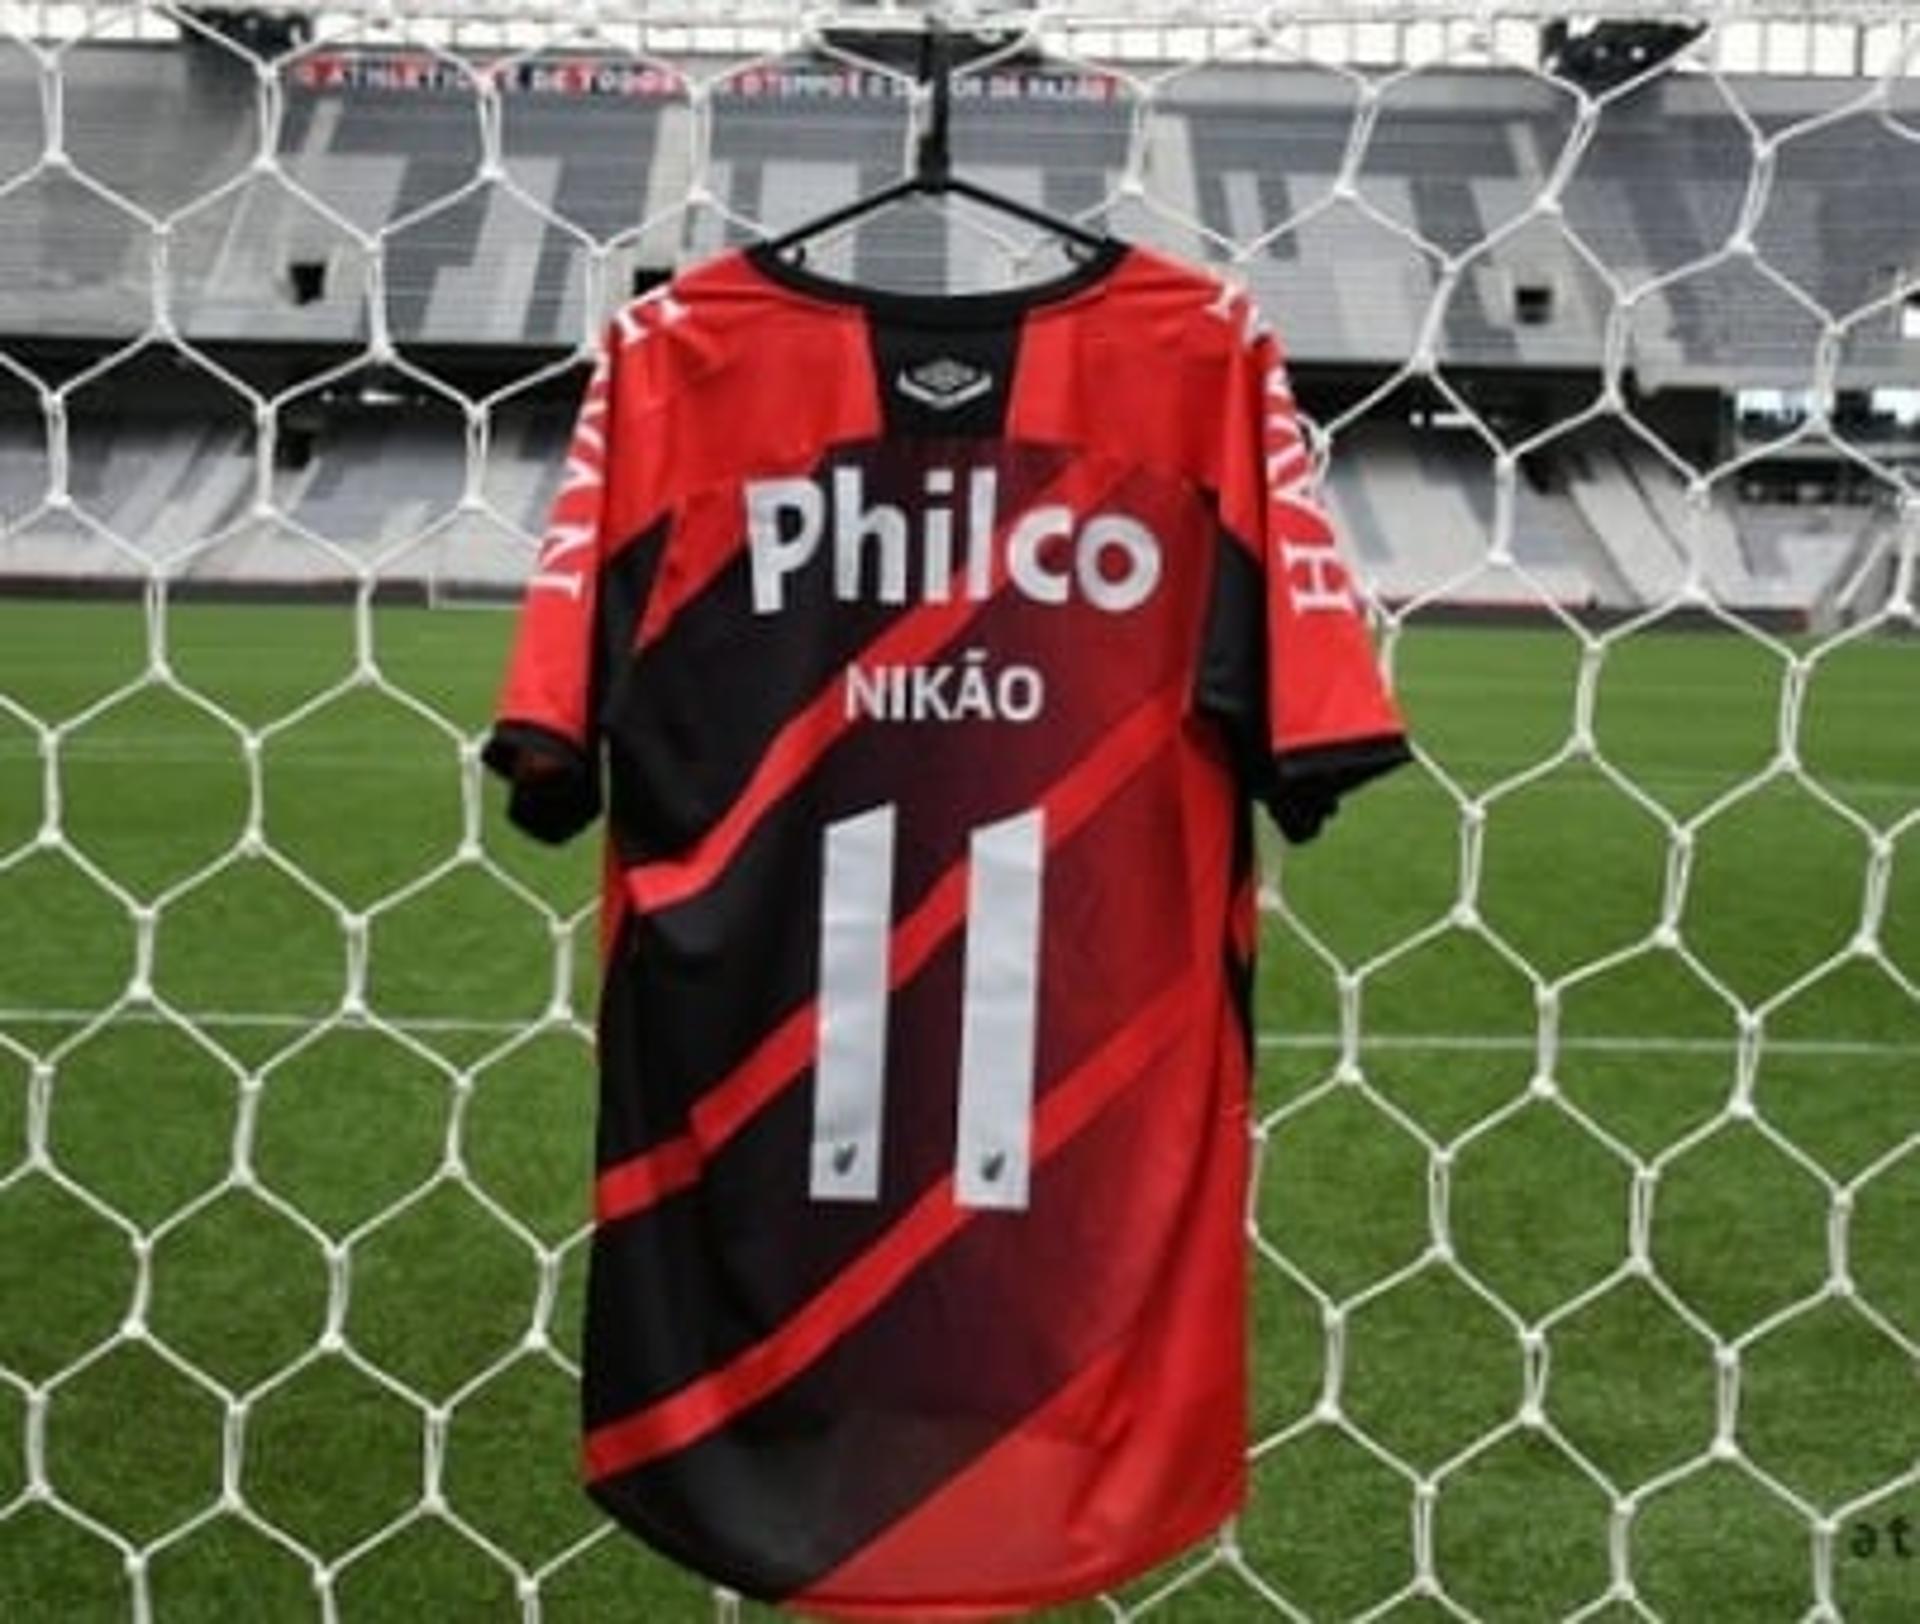 Athletico - Philco